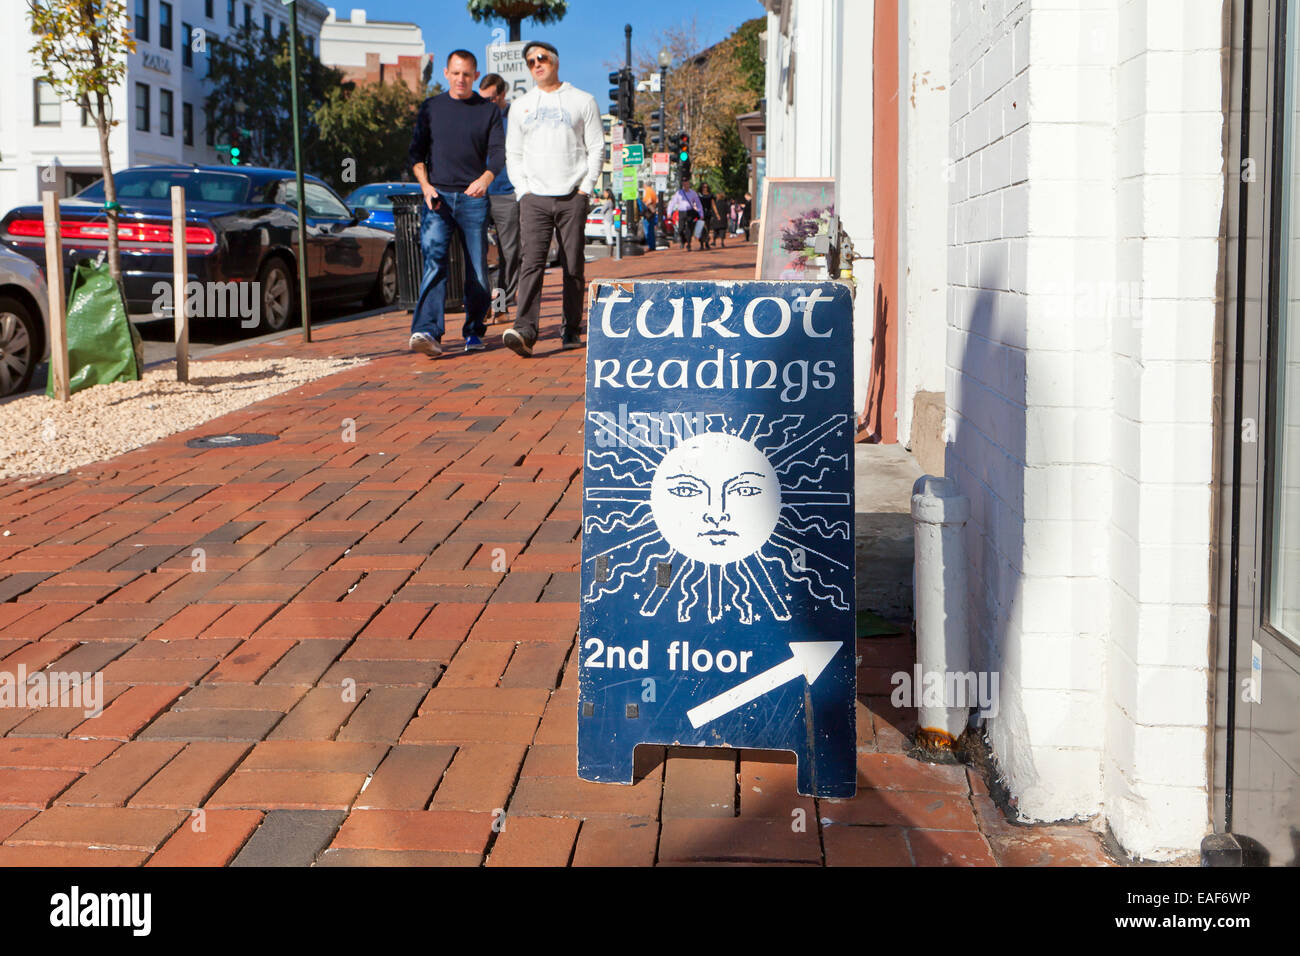 Tarot reading sign on sidewalk - Georgetown, Washington, DC USA Stock Photo